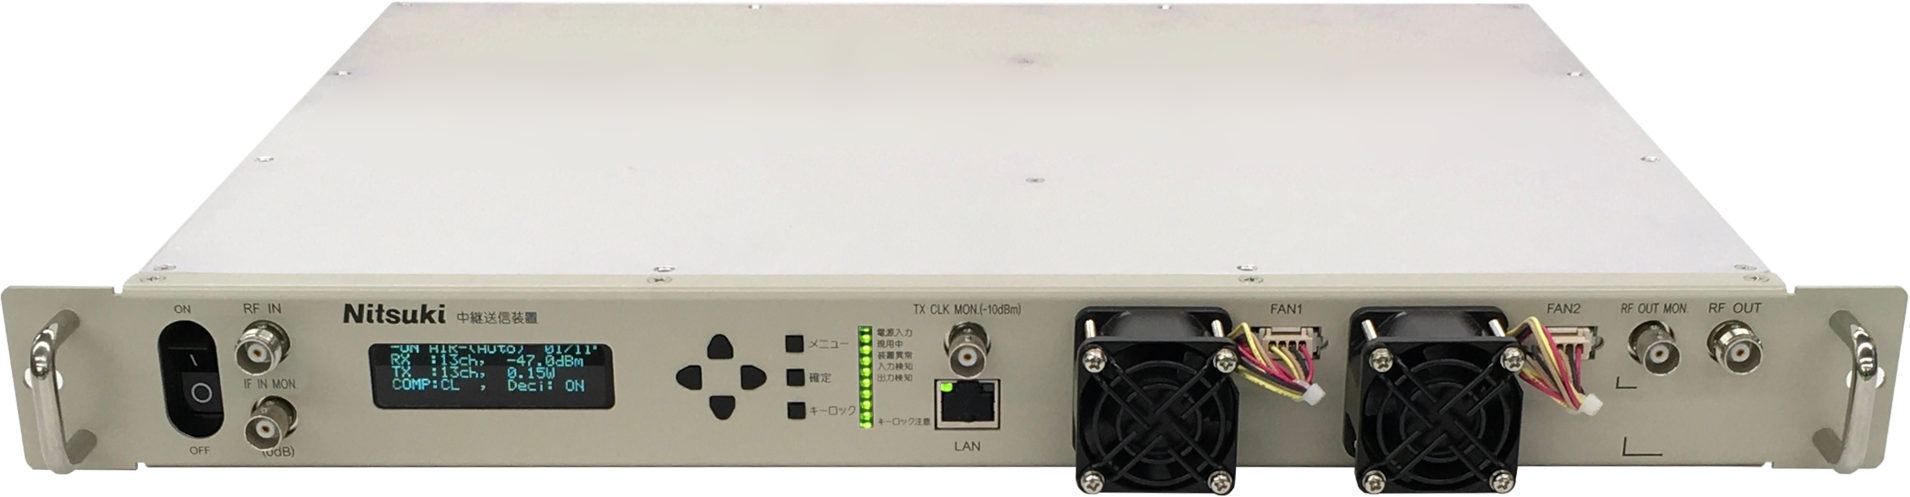 [pic] MODEL 6513 シリーズ: 地上デジタル放送 中継送信装置